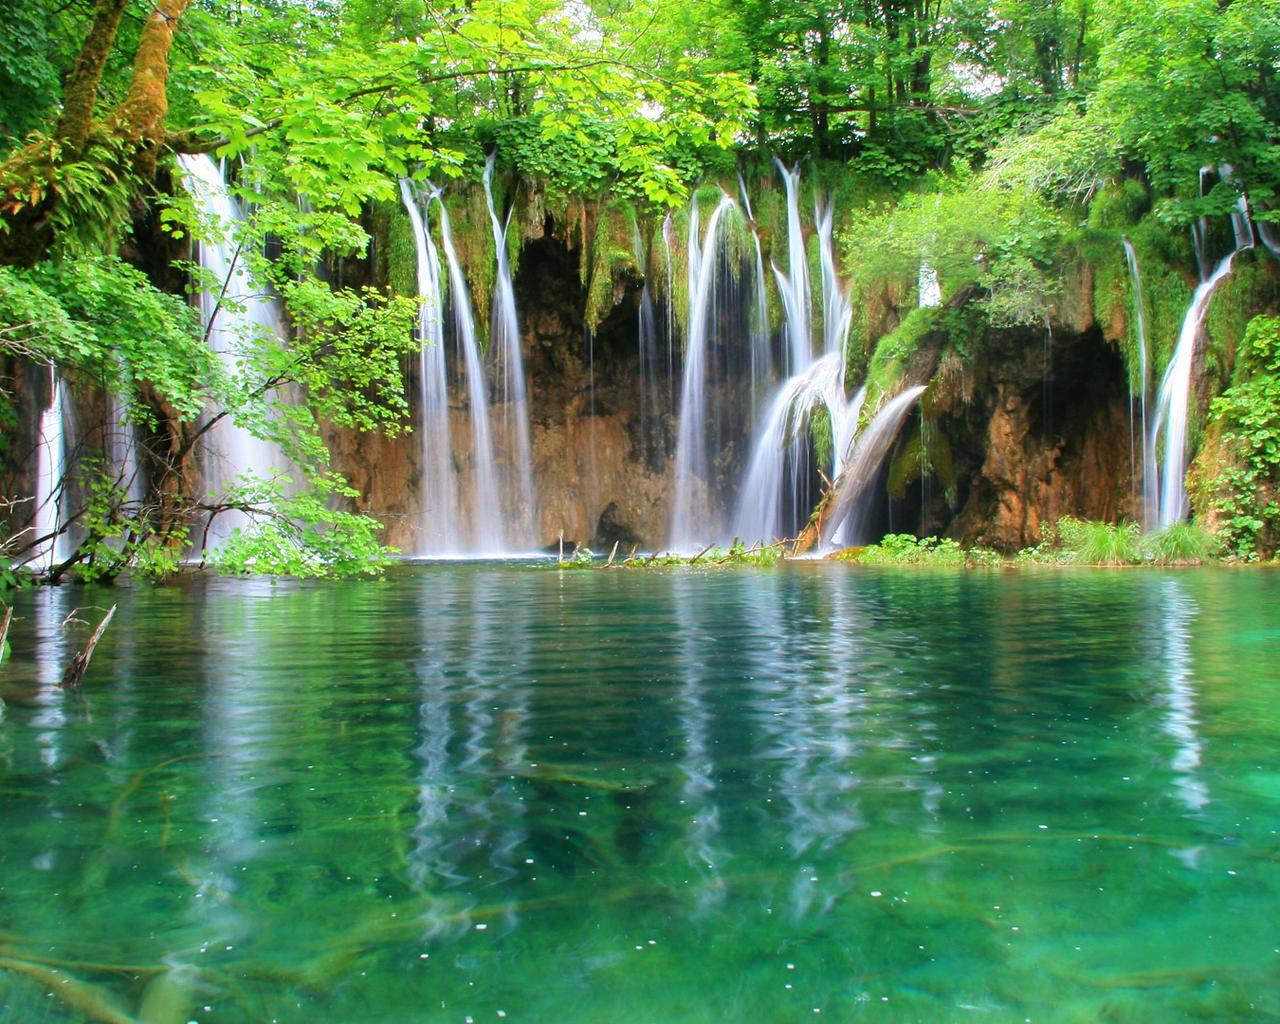 Green nature - beautiful waterfall and mountain lake